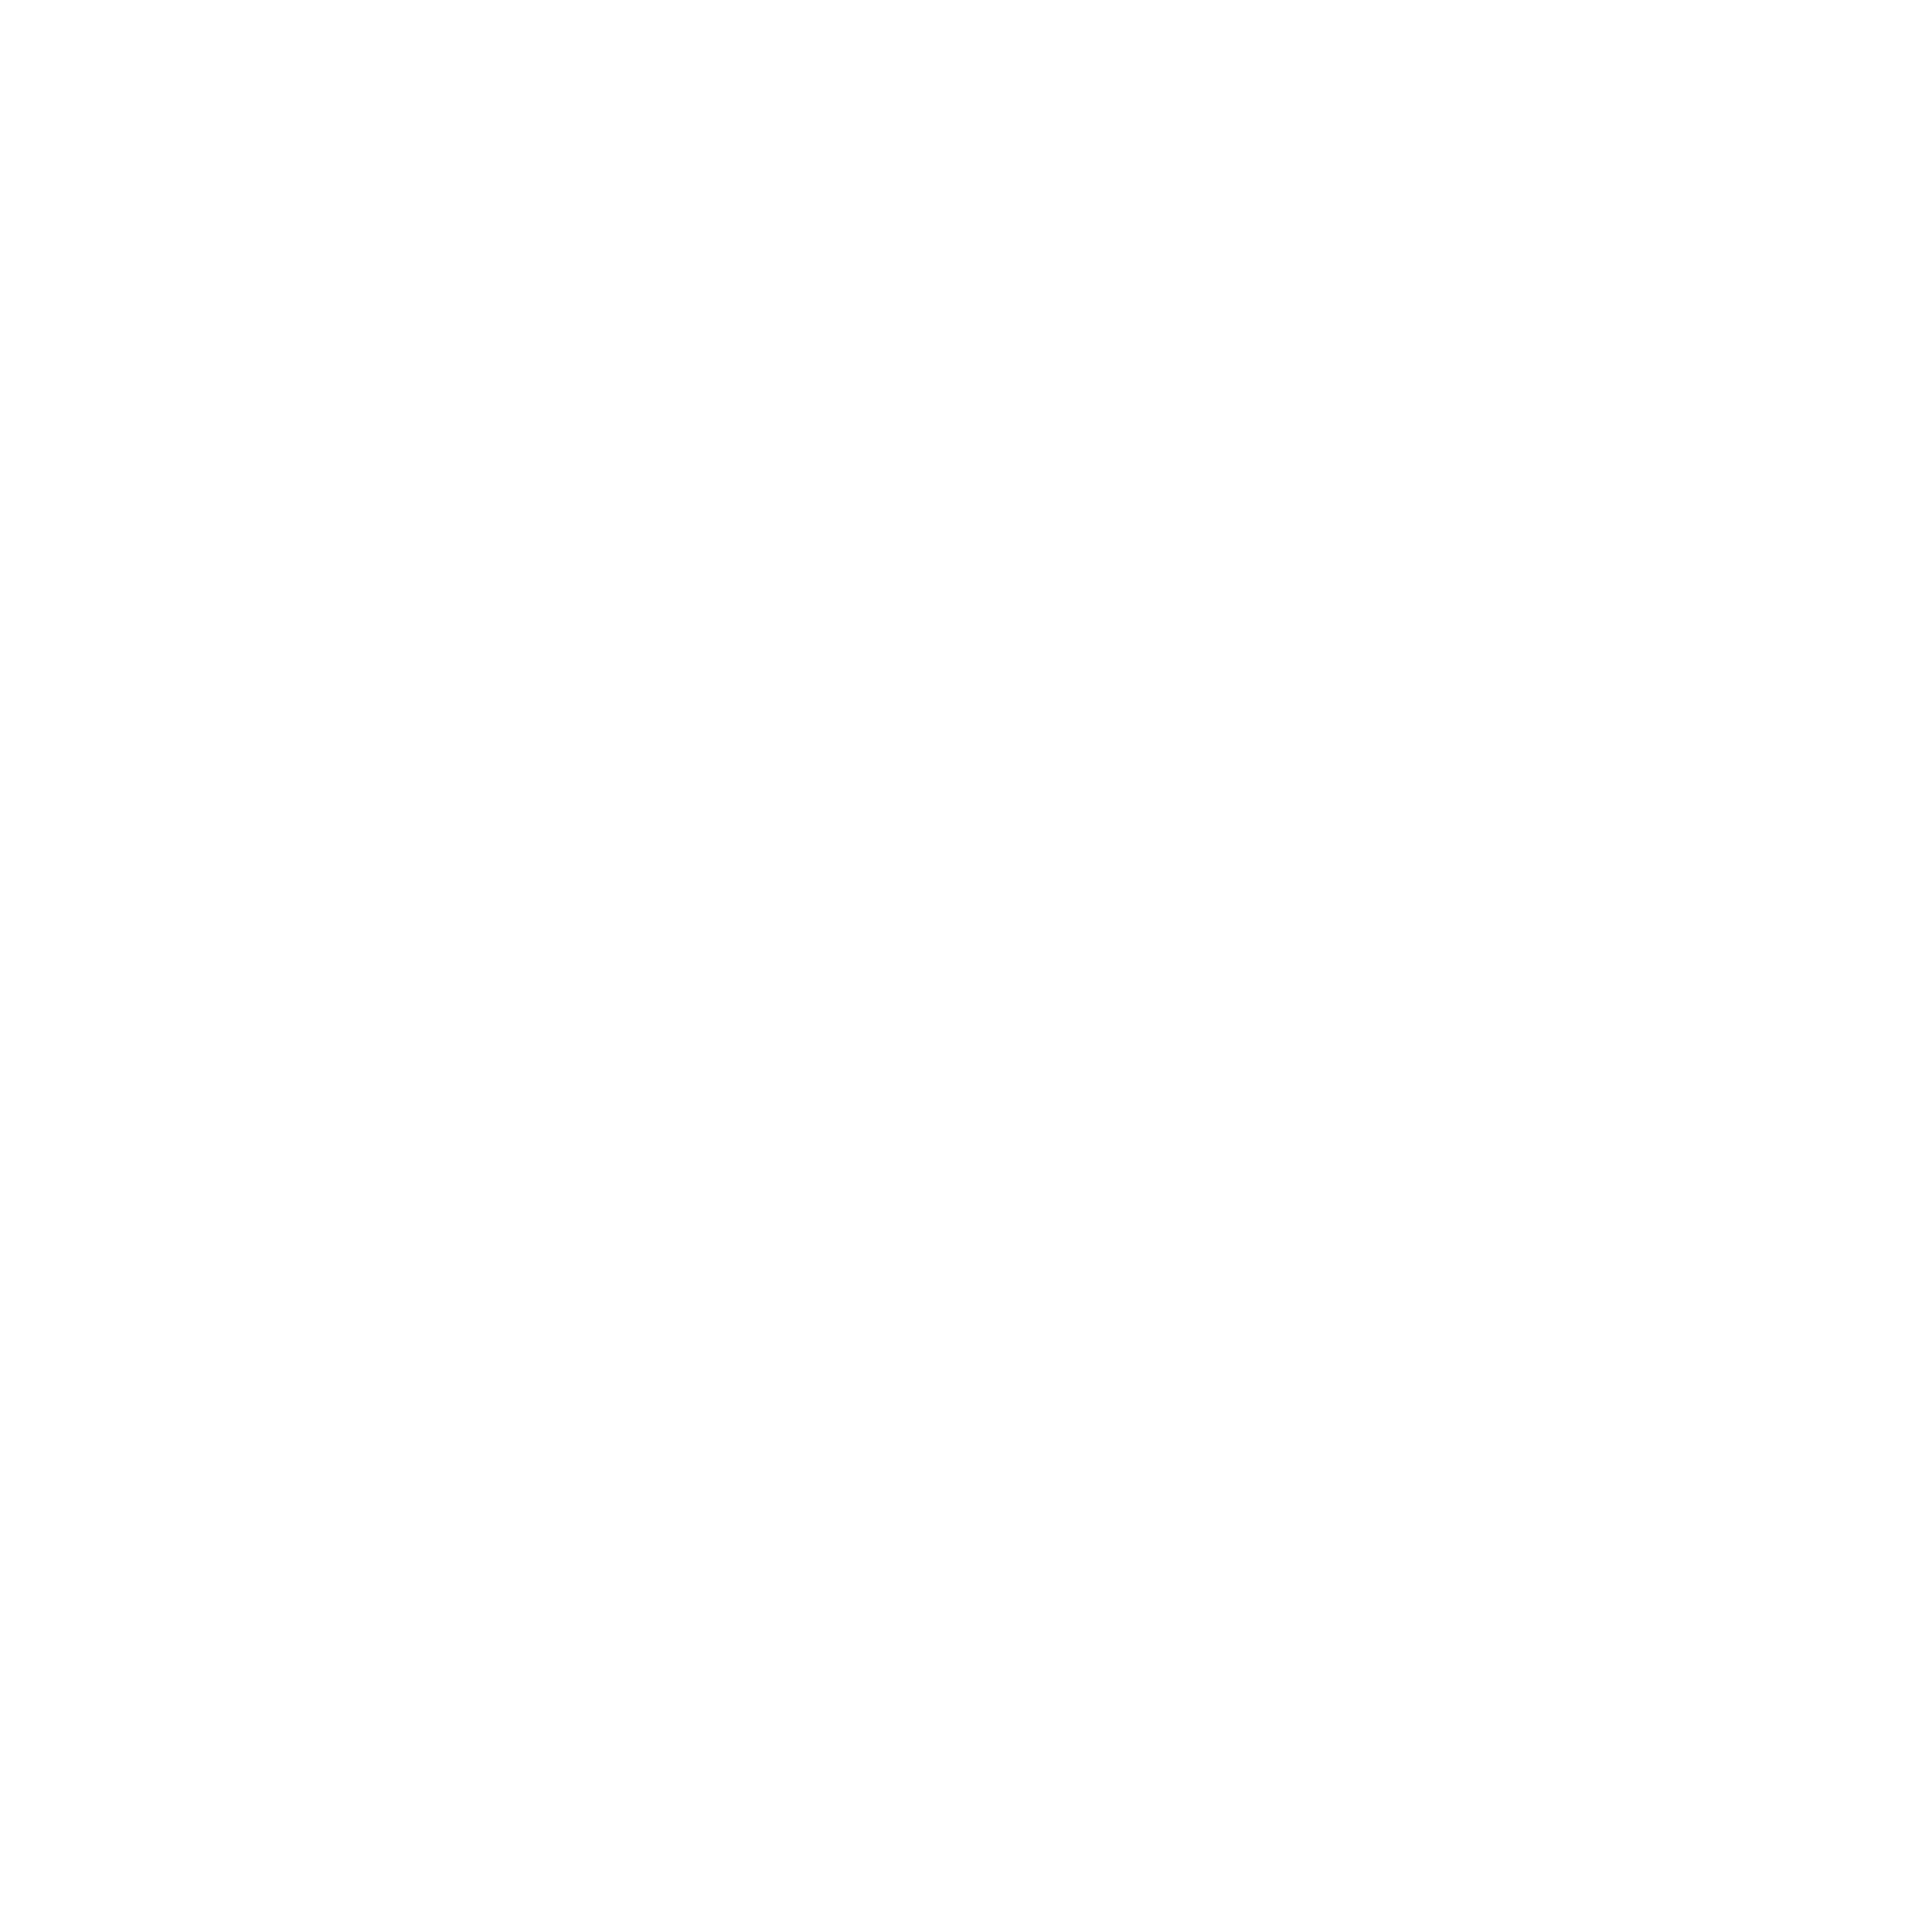 rPET materials